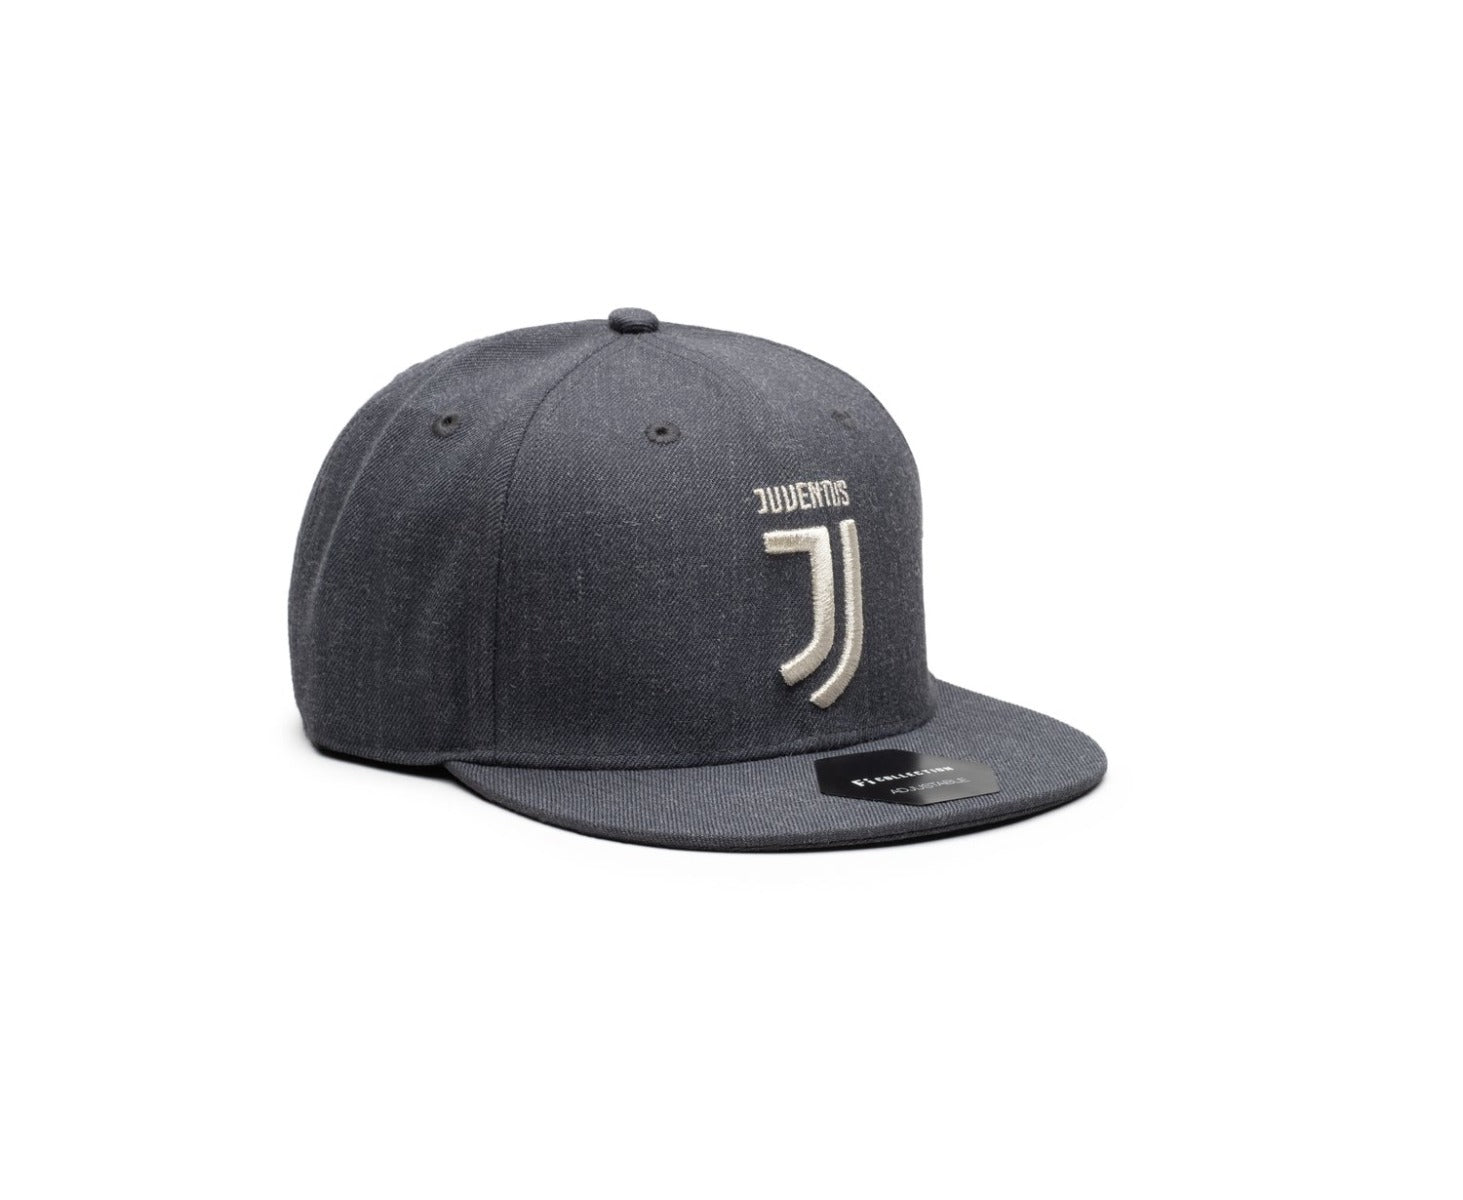 FI Collection Juventus Platinum Snapback Hat - Heather Black